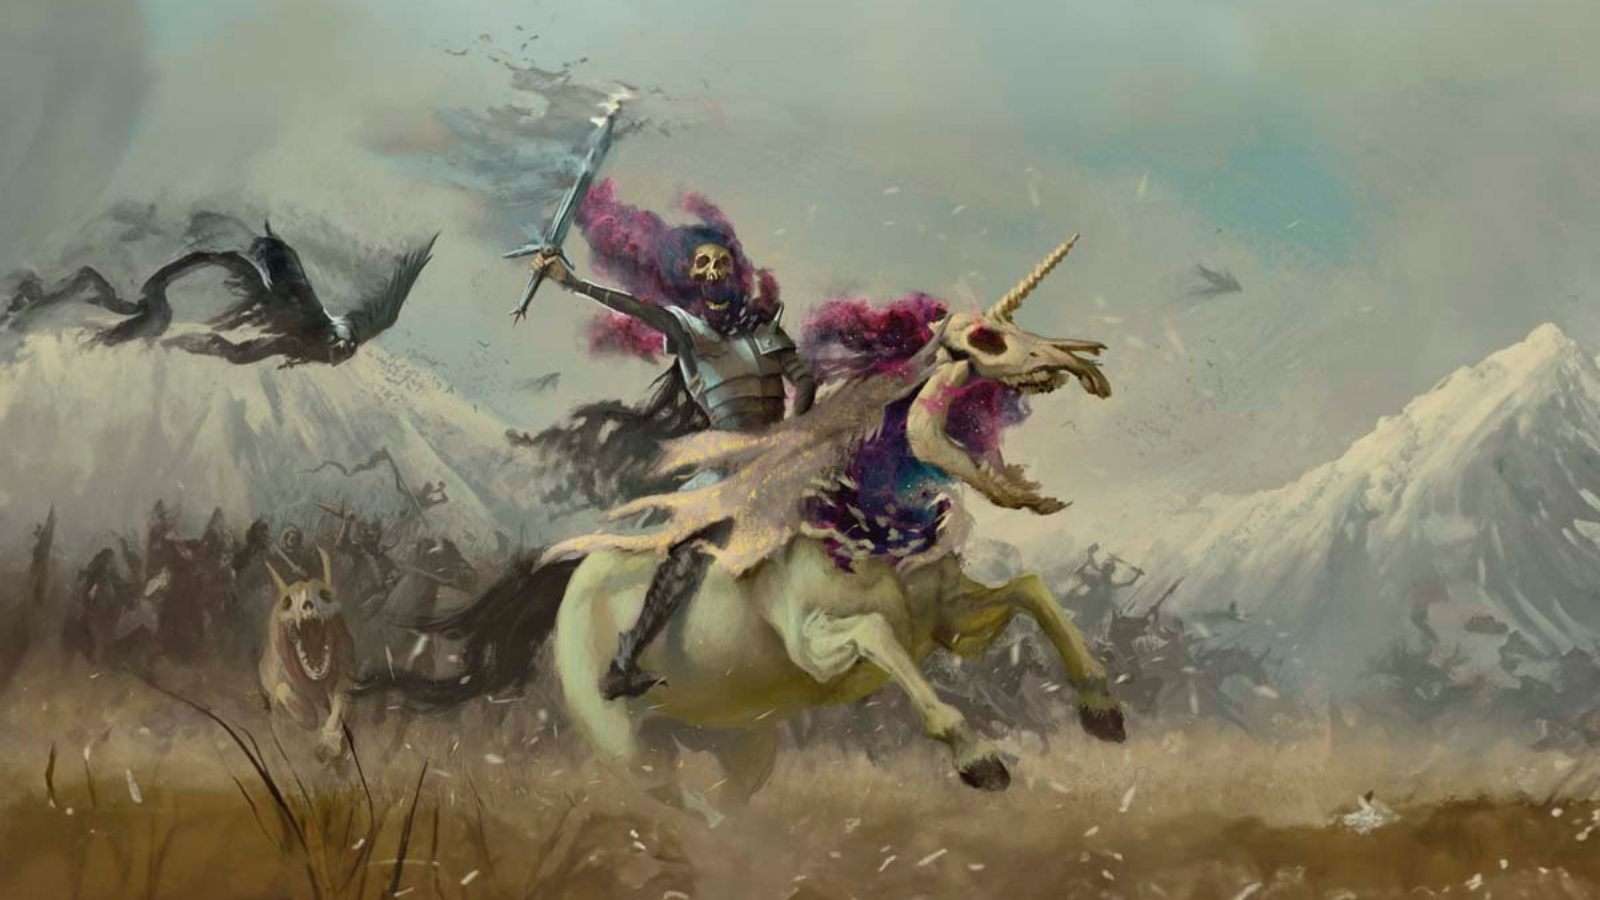 DND Grim Harrow riding undead mounts across a field